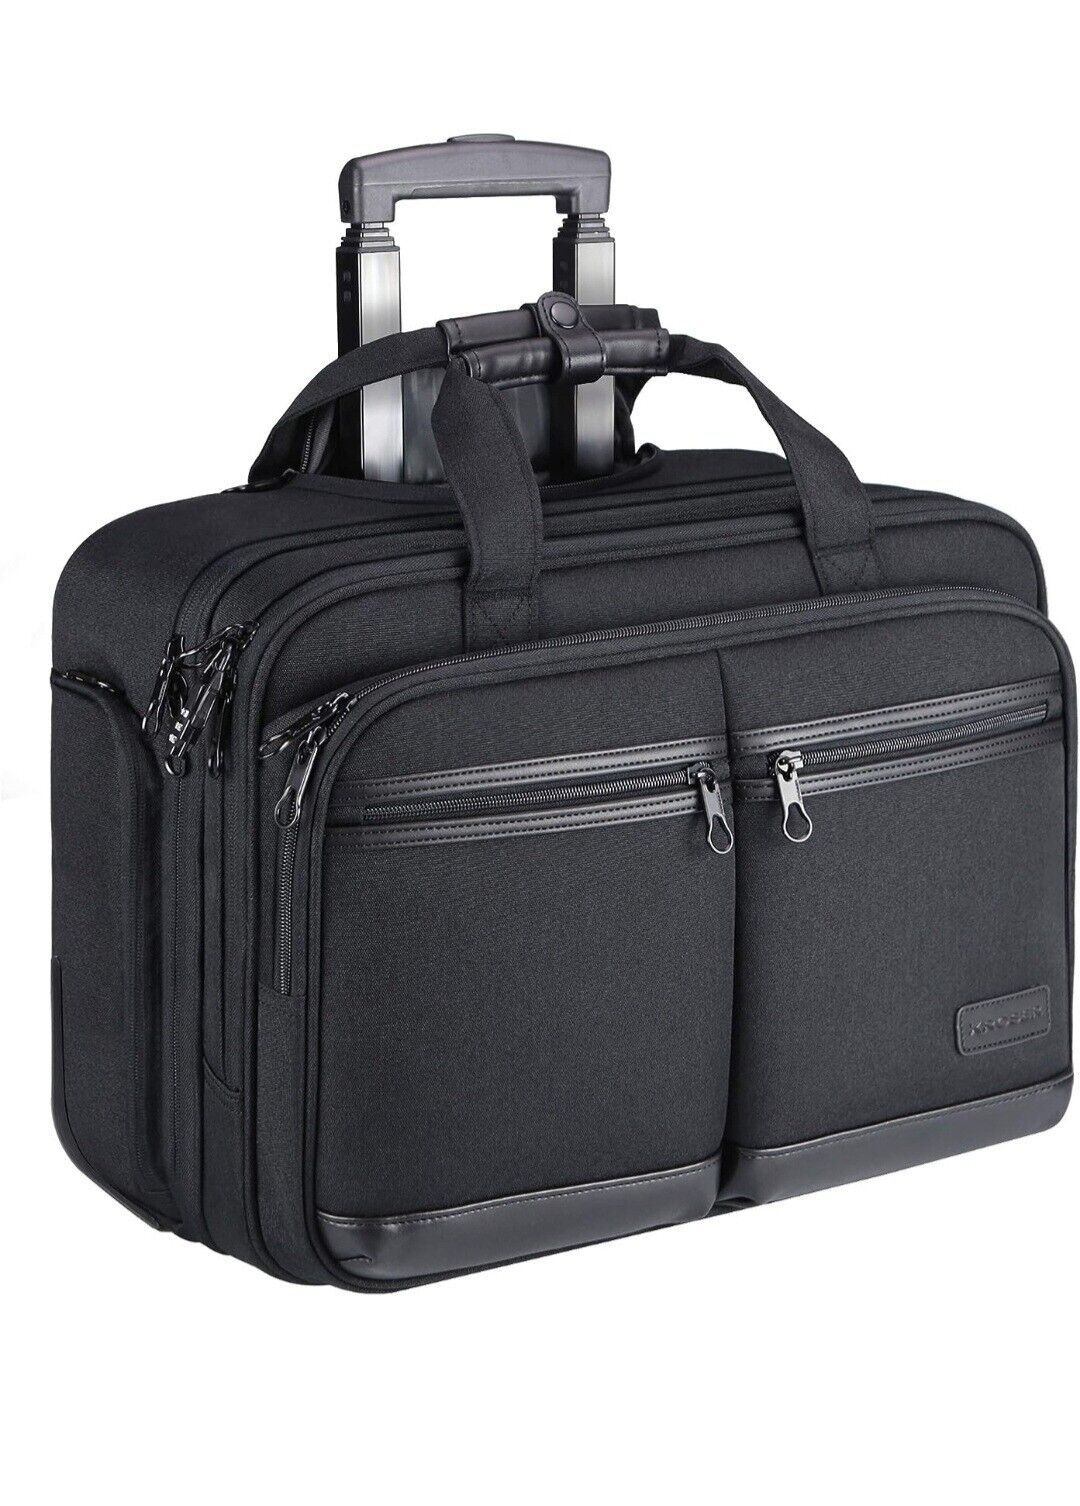 KROSER Rolling Laptop Bag Premium Wheeled Briefcase  Up to 17.3 Inch Laptop LGX7